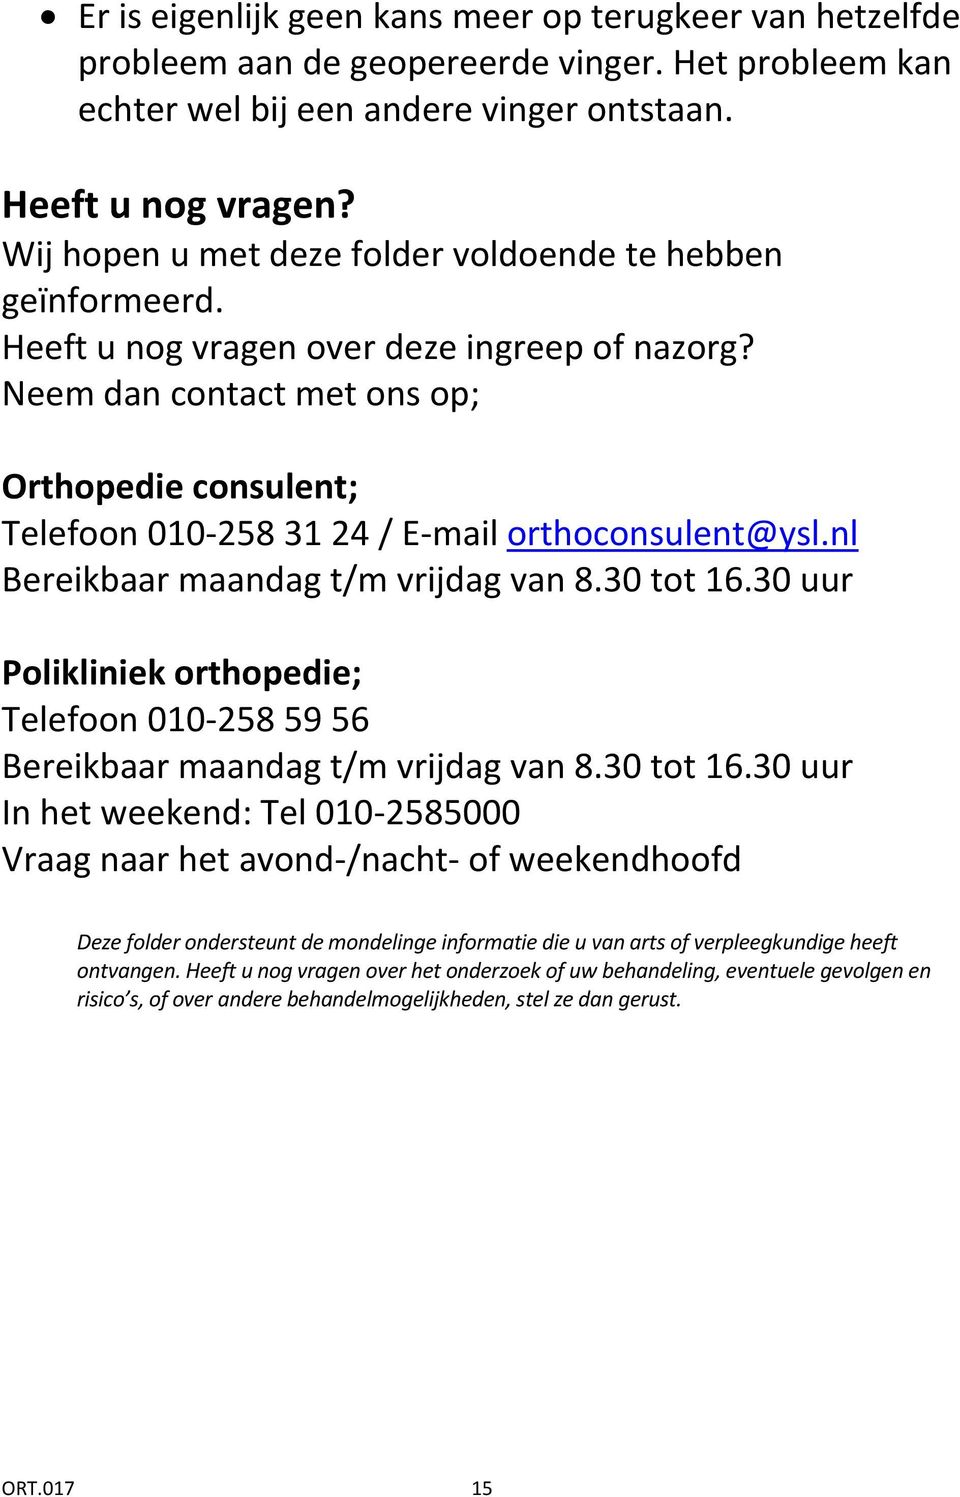 Neem dan contact met ons op; Orthopedie consulent; Telefoon 010-258 31 24 / E-mail orthoconsulent@ysl.nl Bereikbaar maandag t/m vrijdag van 8.30 tot 16.